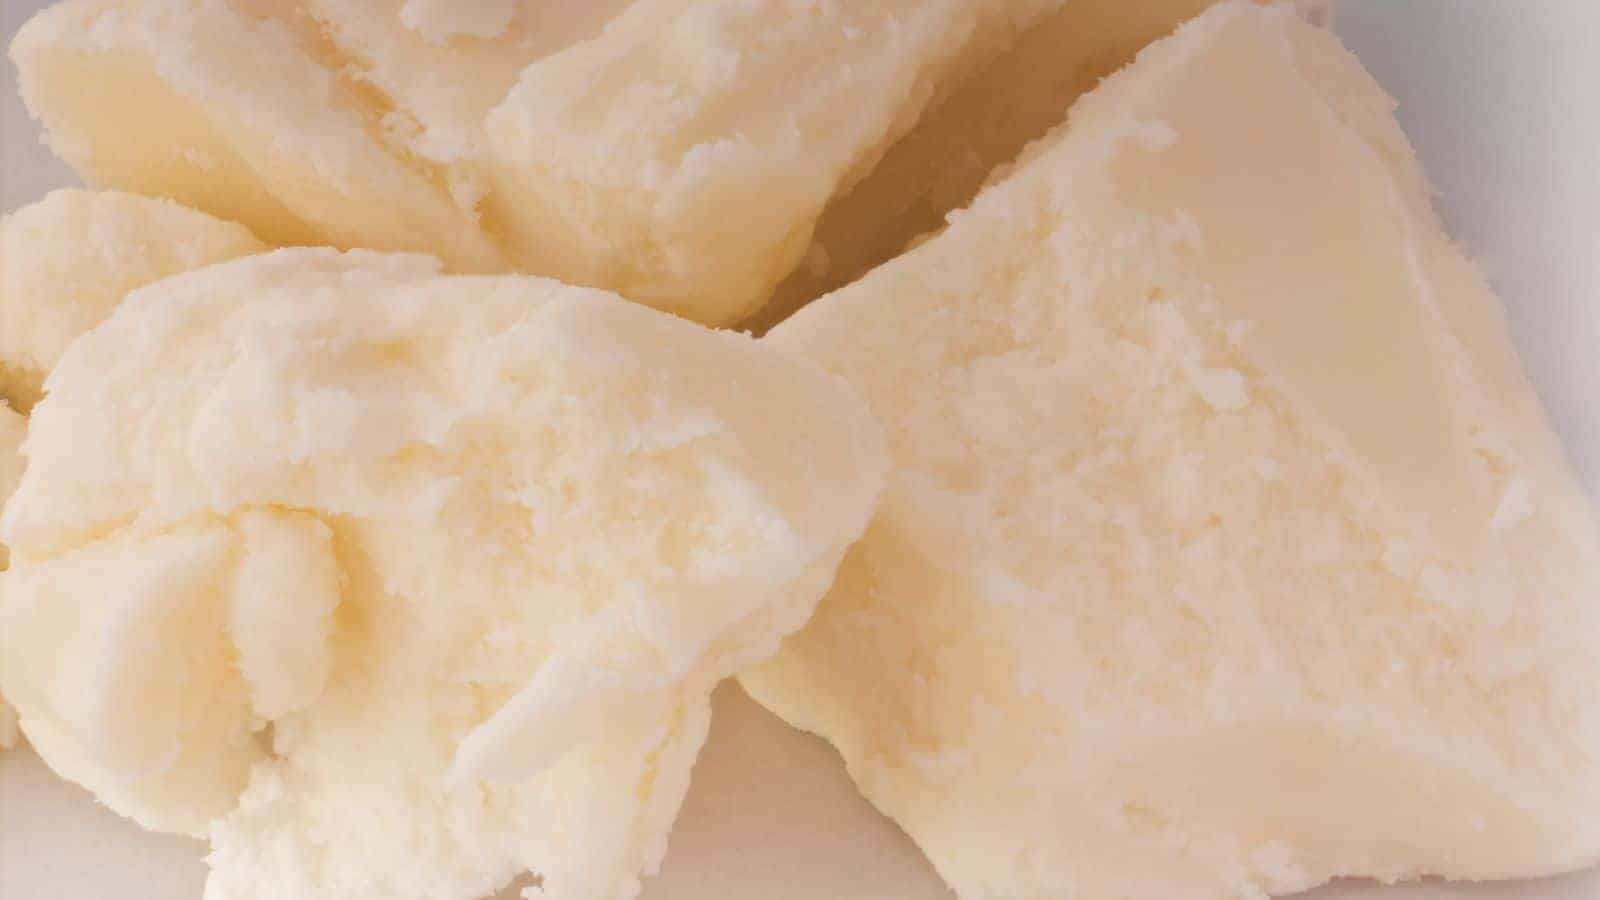 Eastern Healers Explain 10 Ways Kokum Butter Boosts Skin Anti-Aging